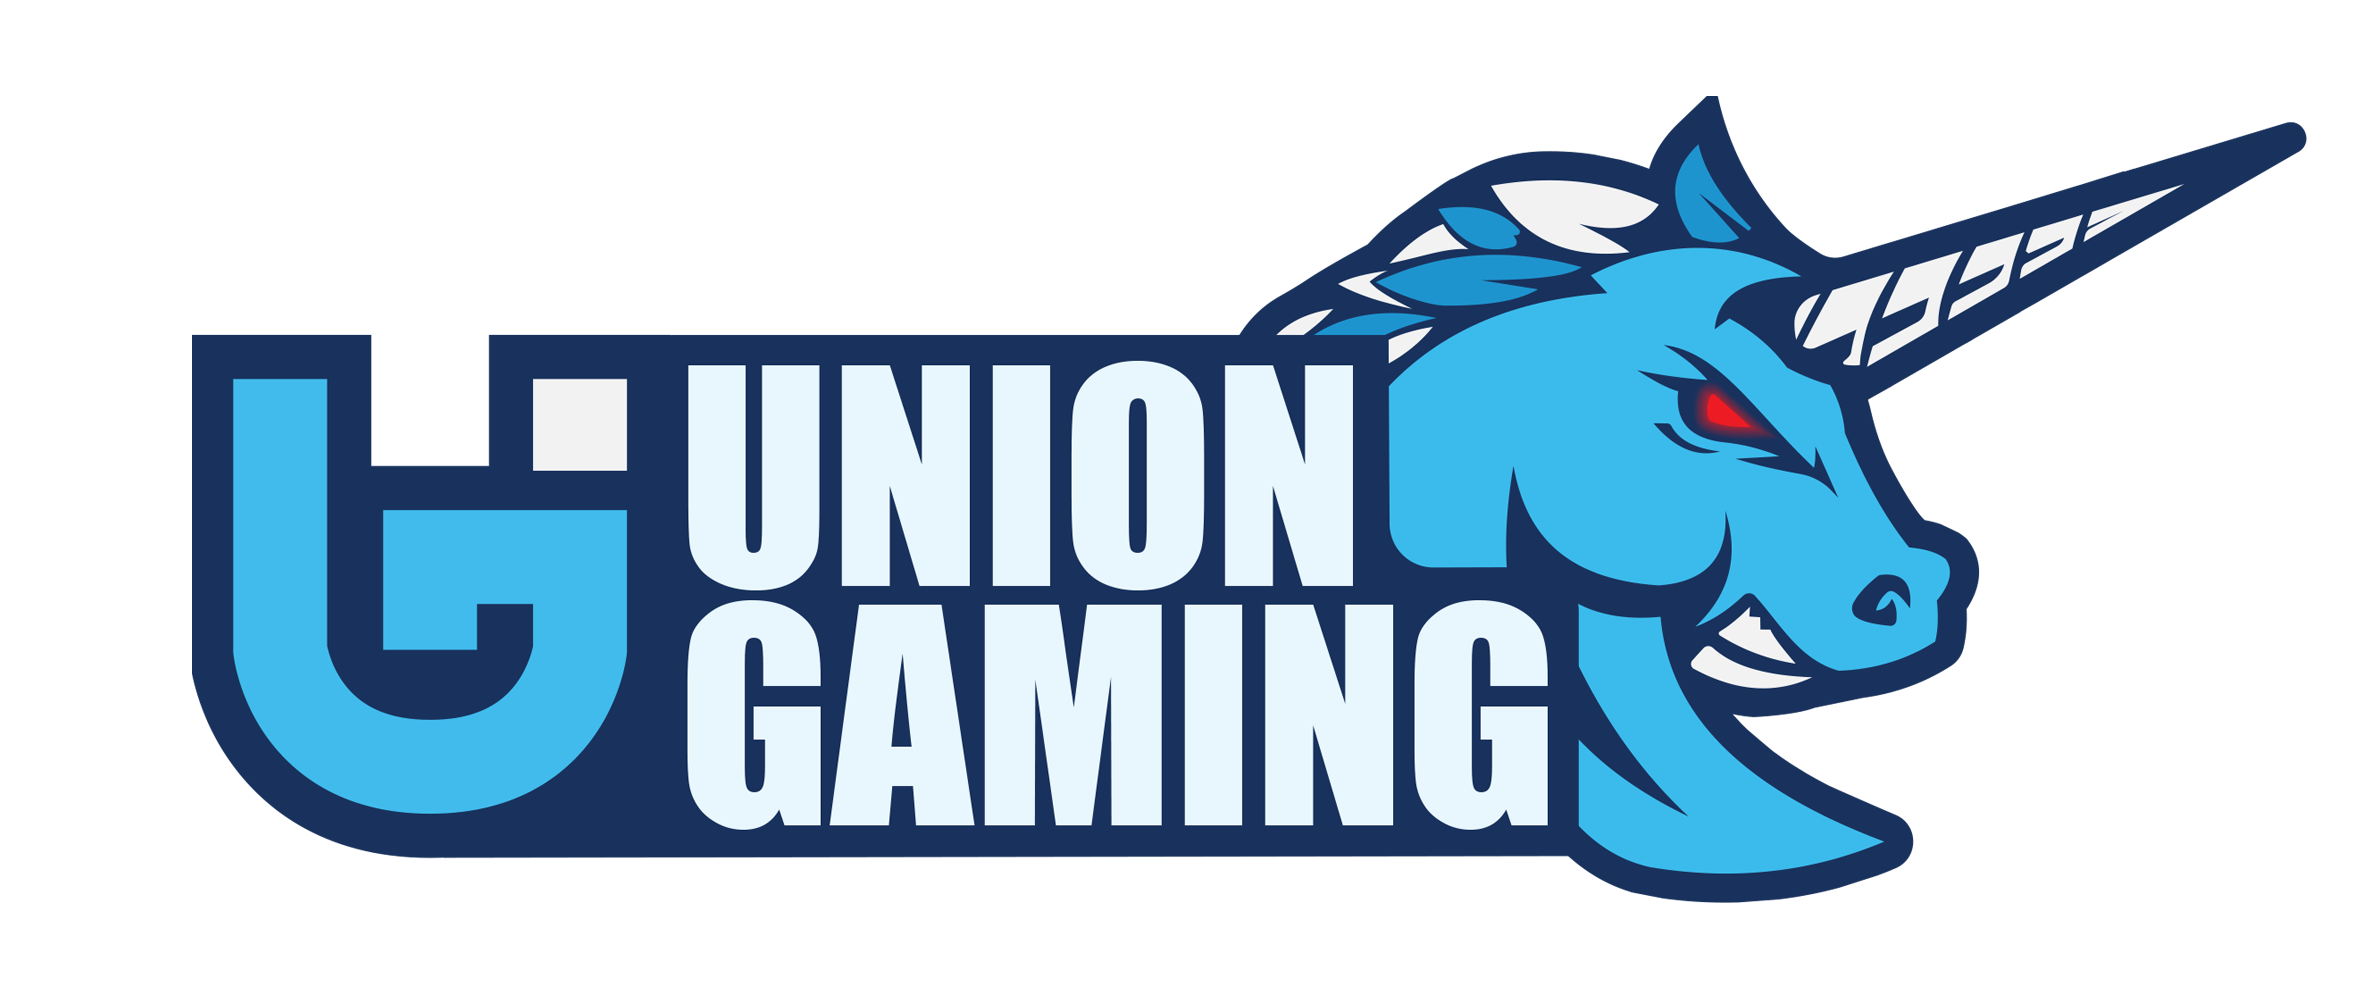 Union Gaming Academy